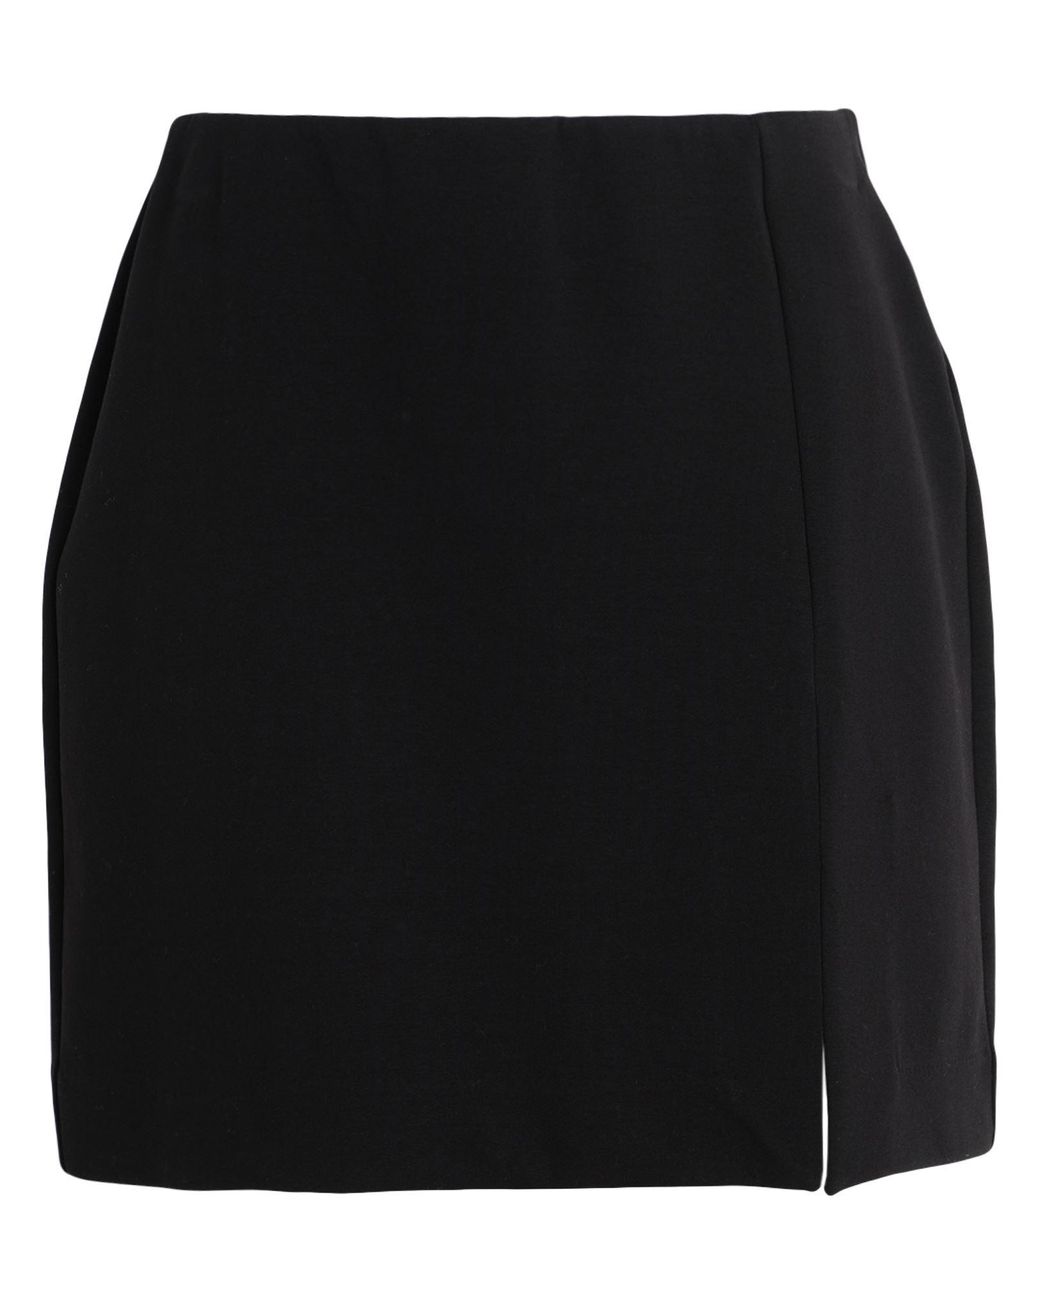 Allure Black Mini Skirt – Beginning Boutique US, 42% OFF